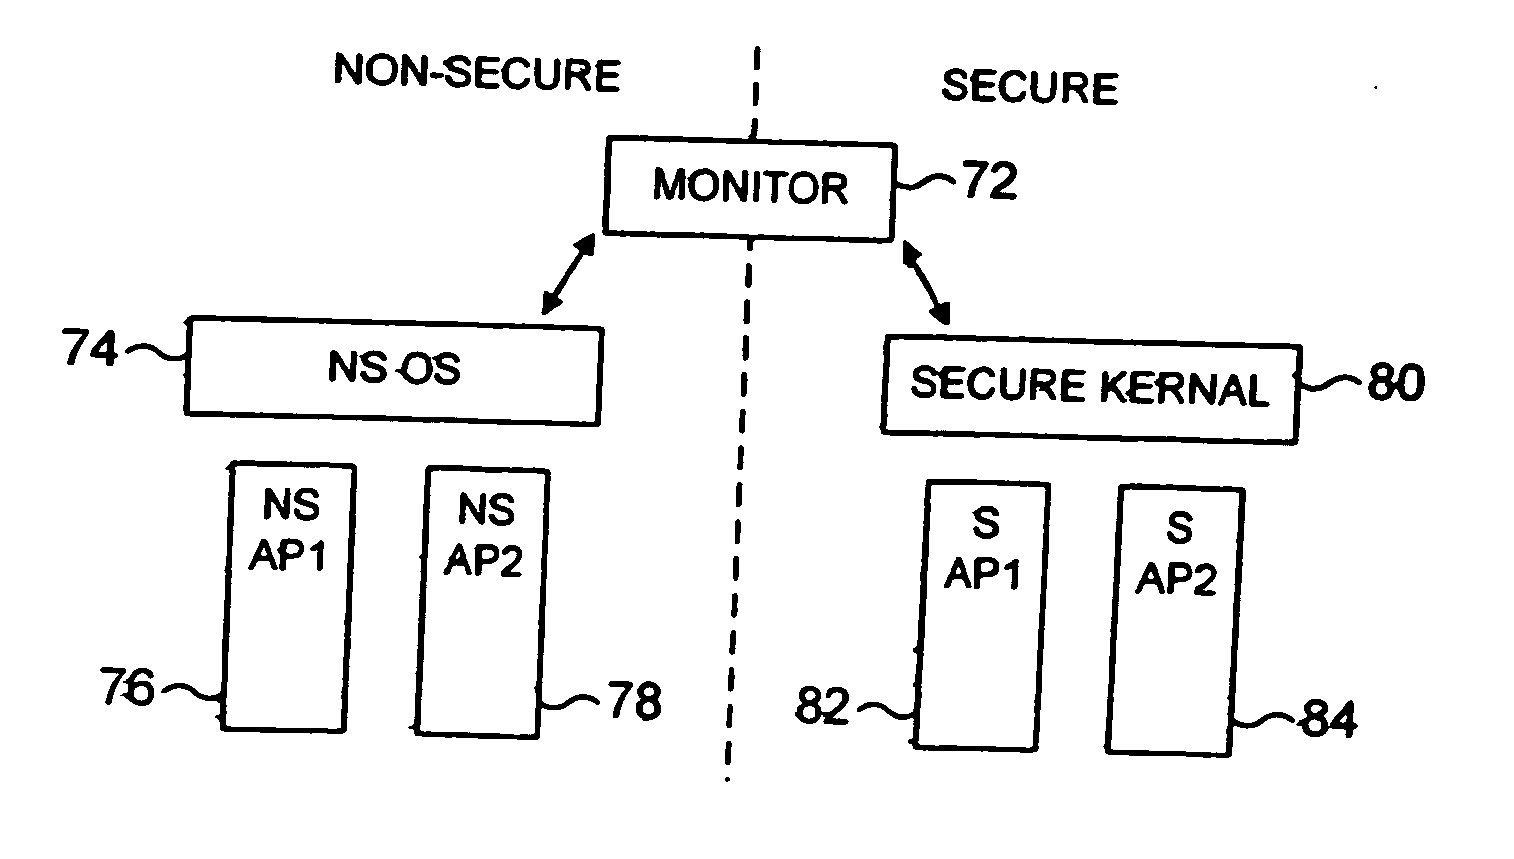 Access control in a data processing apparatus